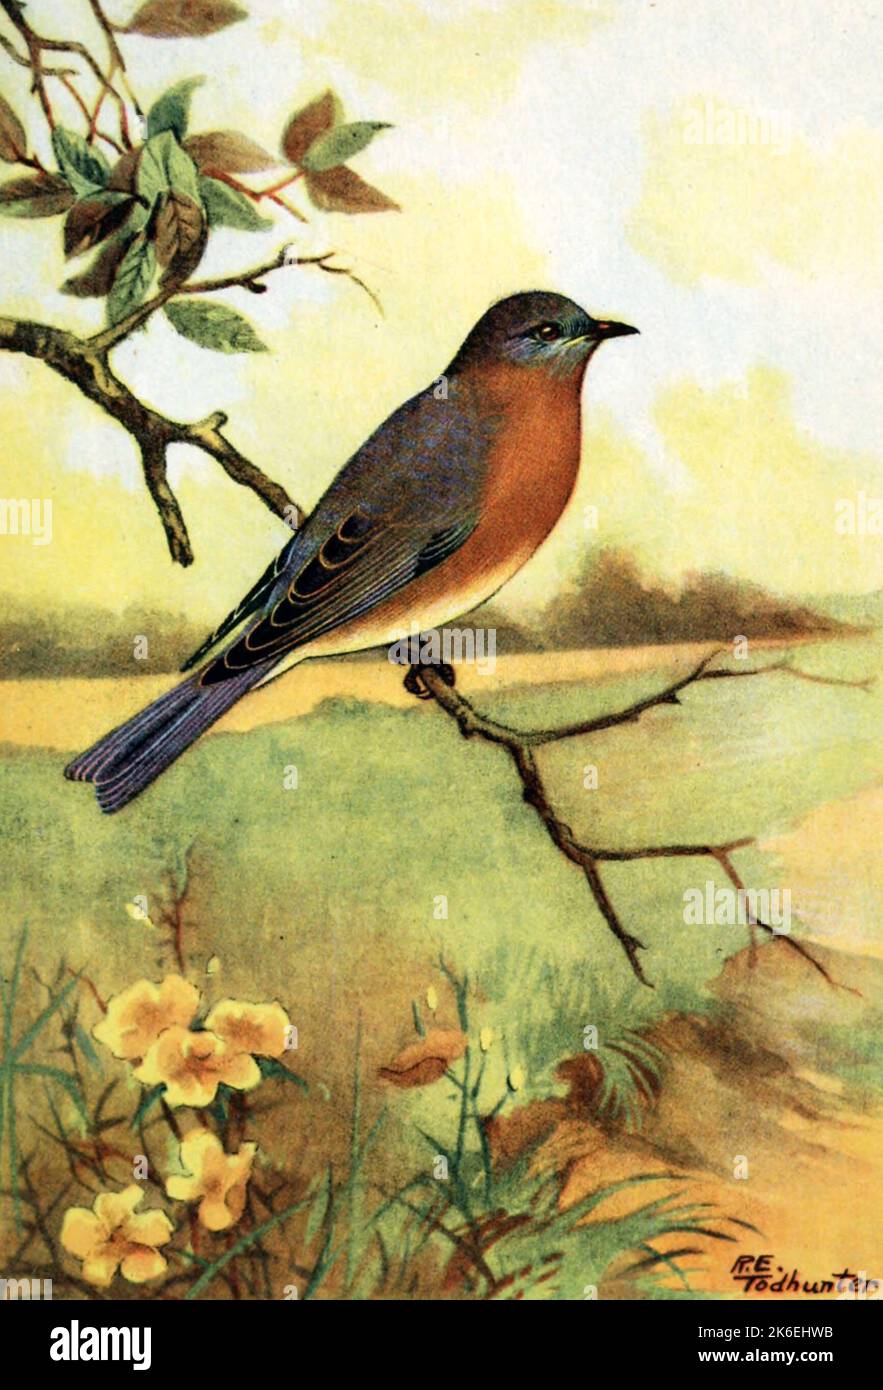 Bluebird (Male) by R E Todhunter, illustration circa 1920s Stock Photo